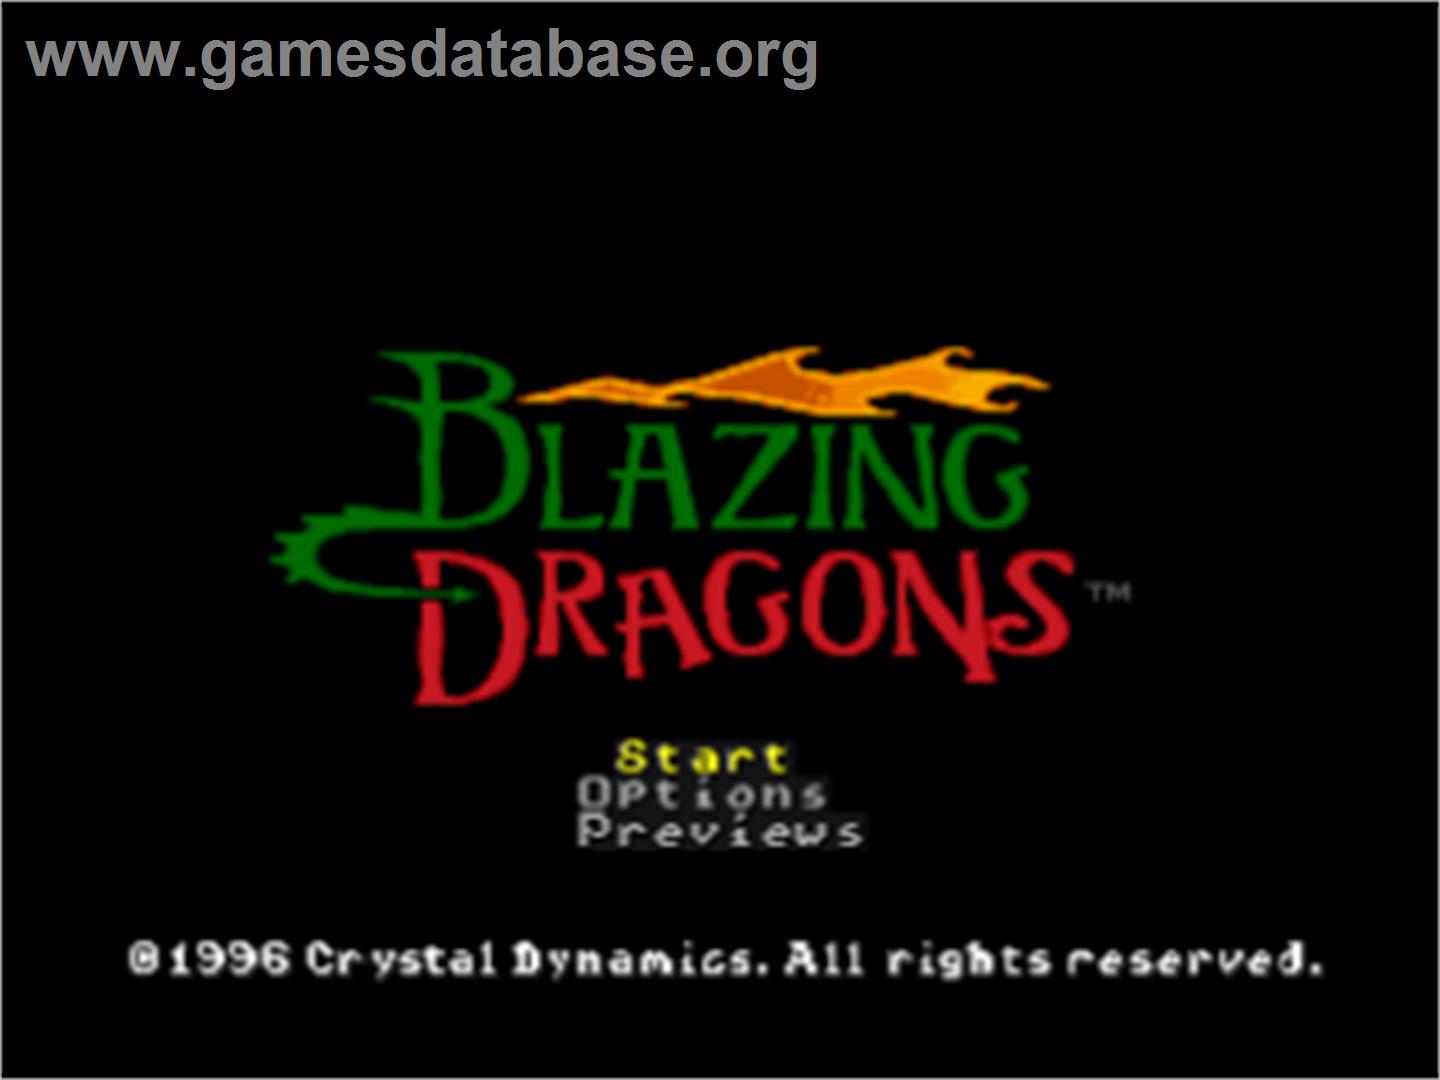 Blazing Dragons - Sony Playstation - Artwork - Title Screen